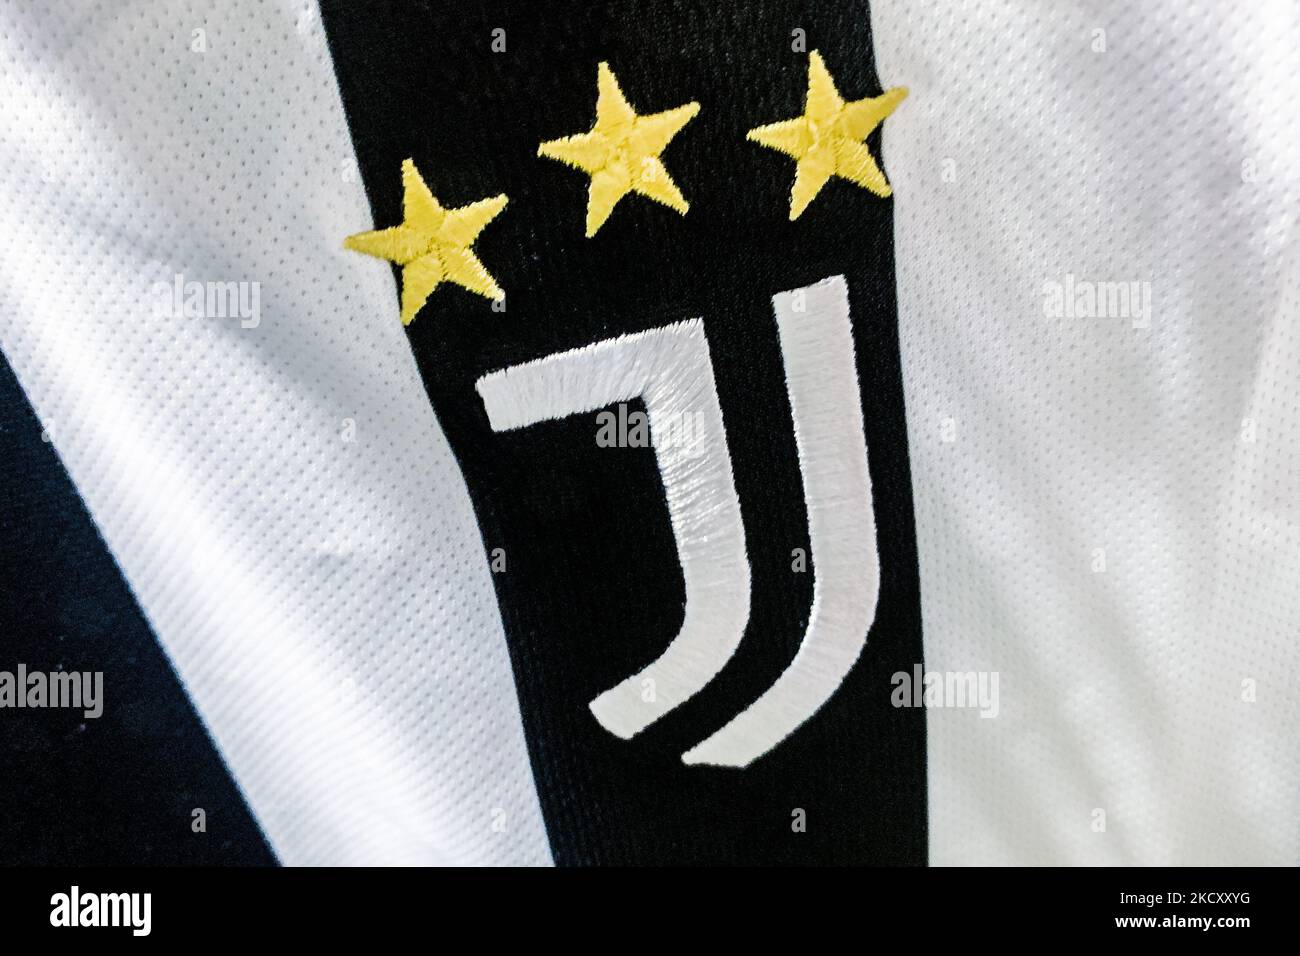 Juventus football club logo hi-res stock photography and images - Alamy